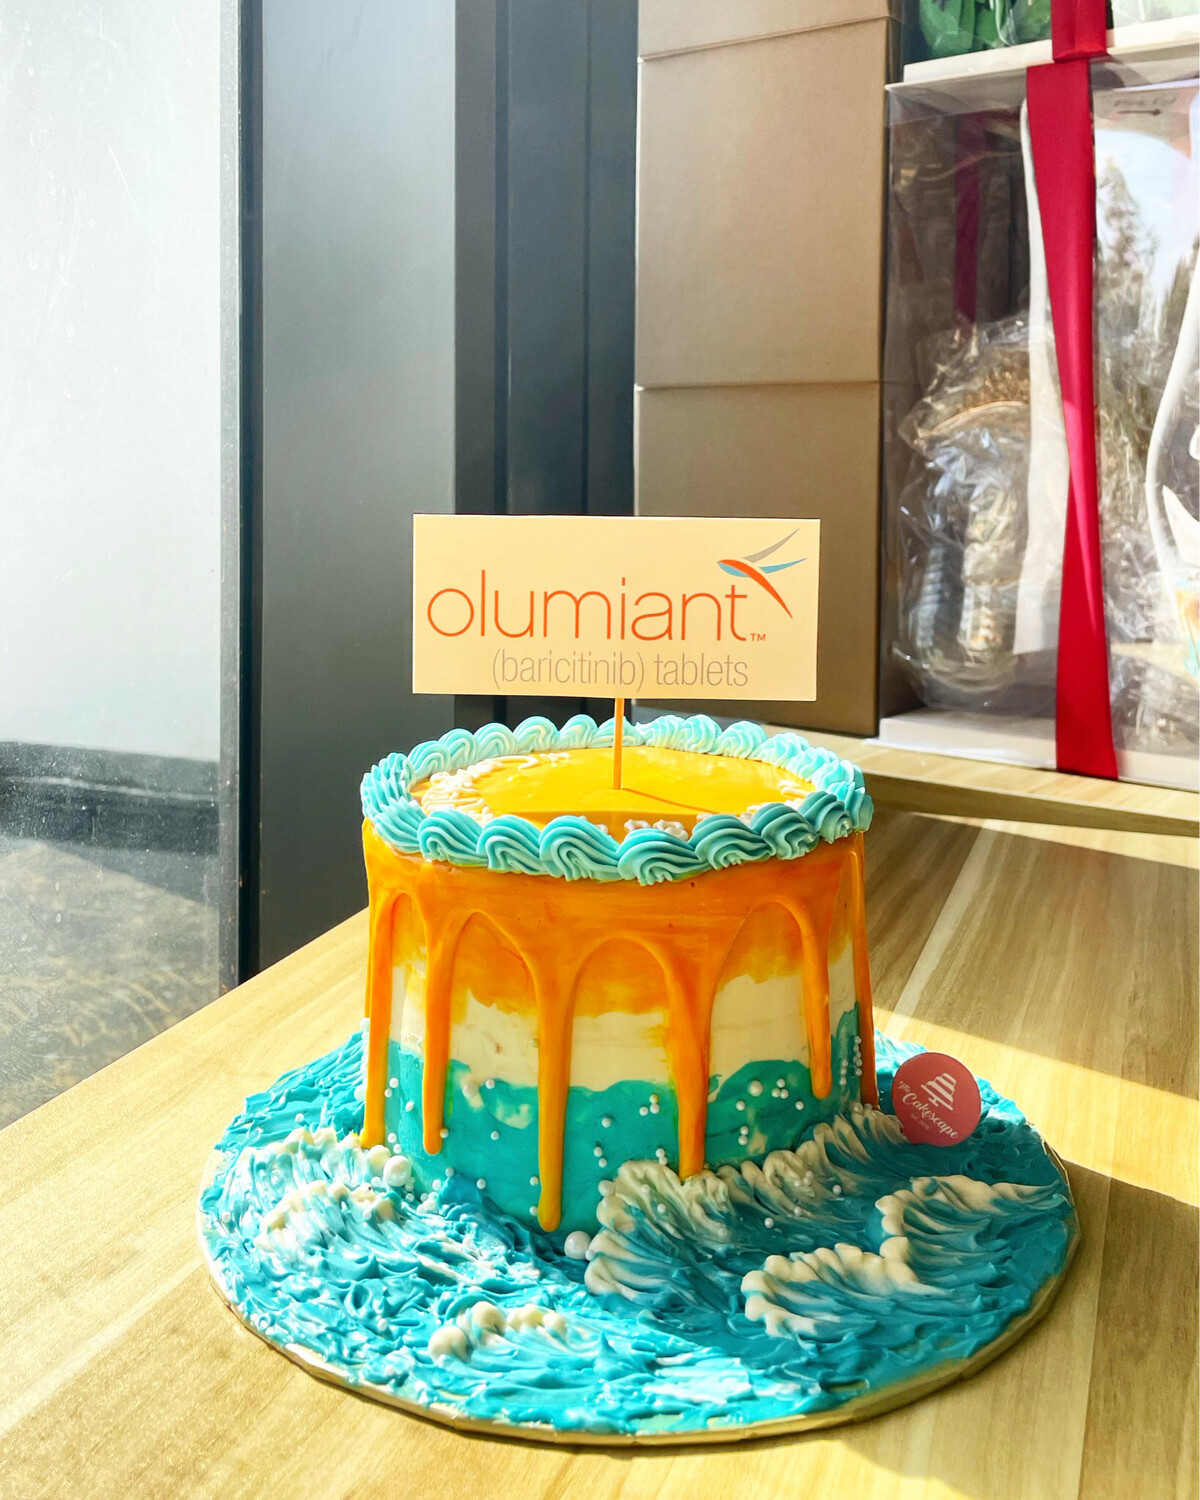 Corporate Cake - Olumiant